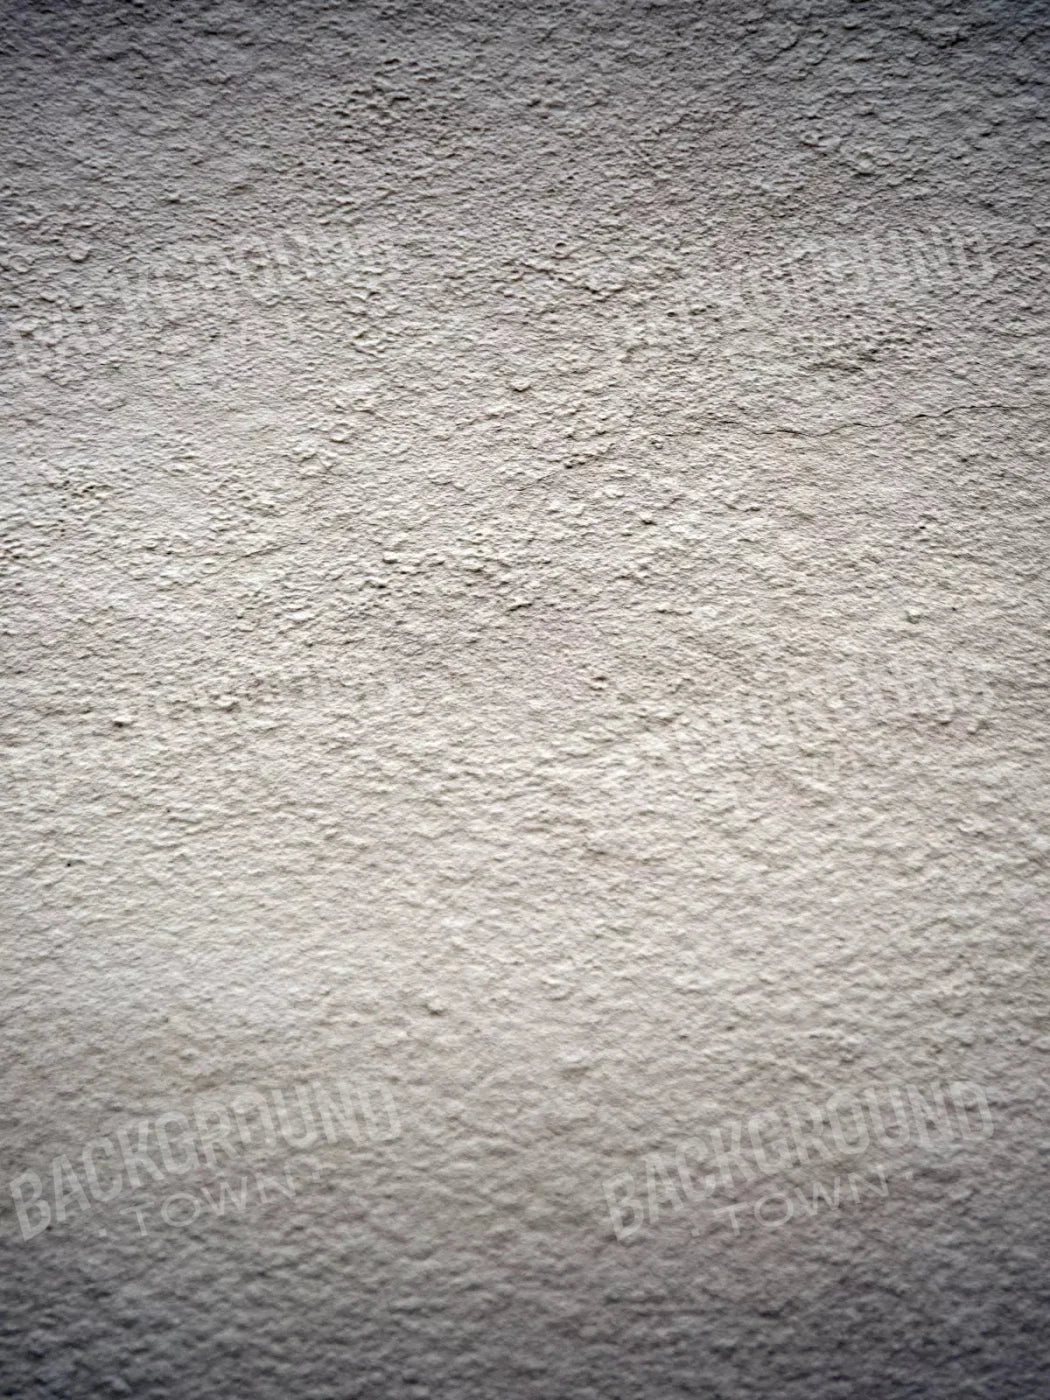 Concrete Jungles 5X68 Fleece ( 60 X 80 Inch ) Backdrop